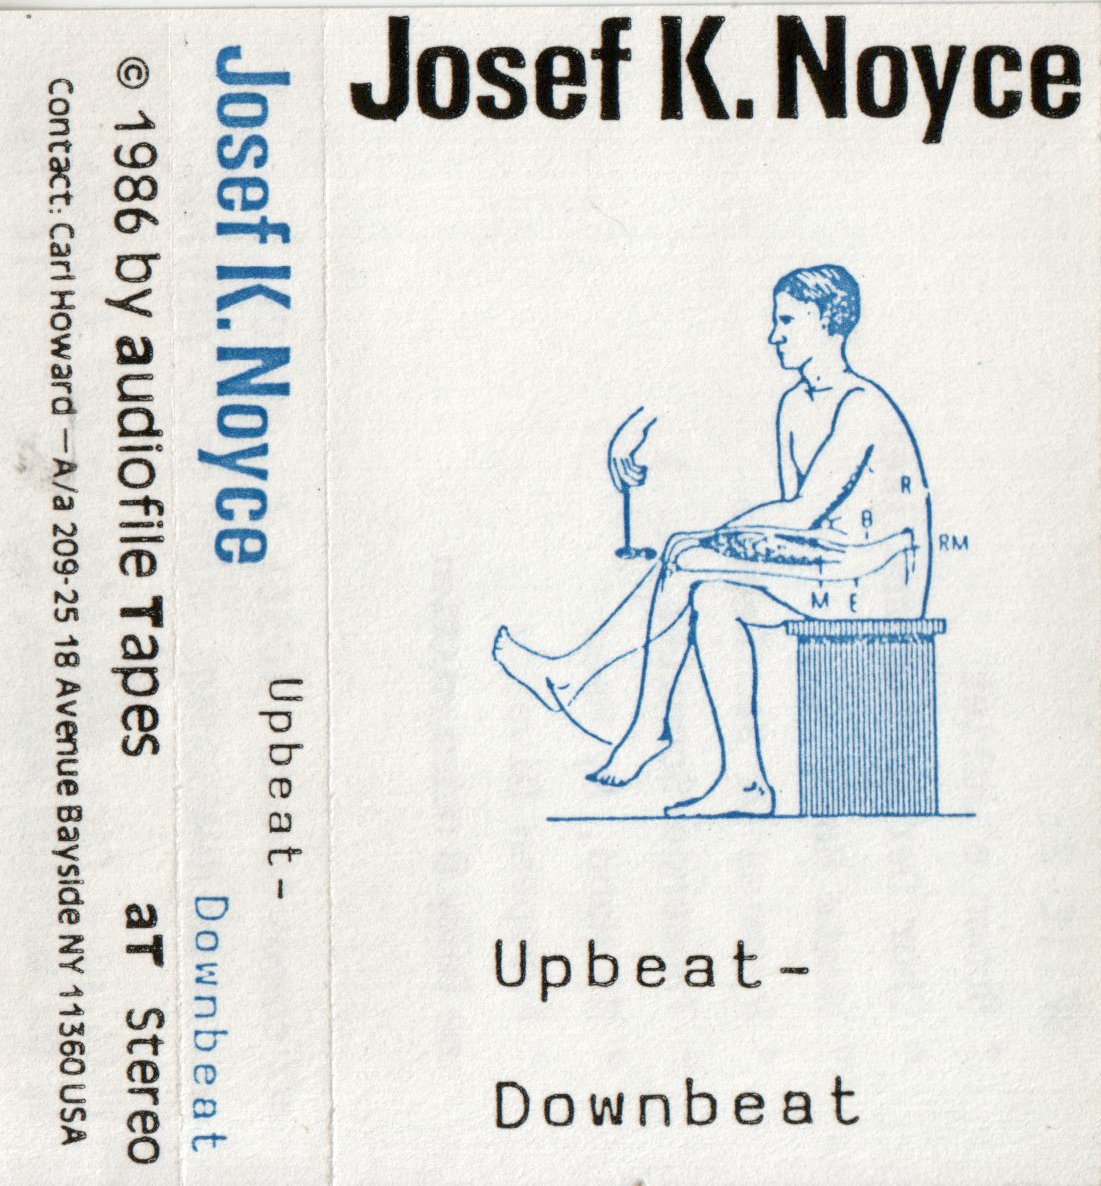 Tape: "Upbeat - Downbeat" - aT